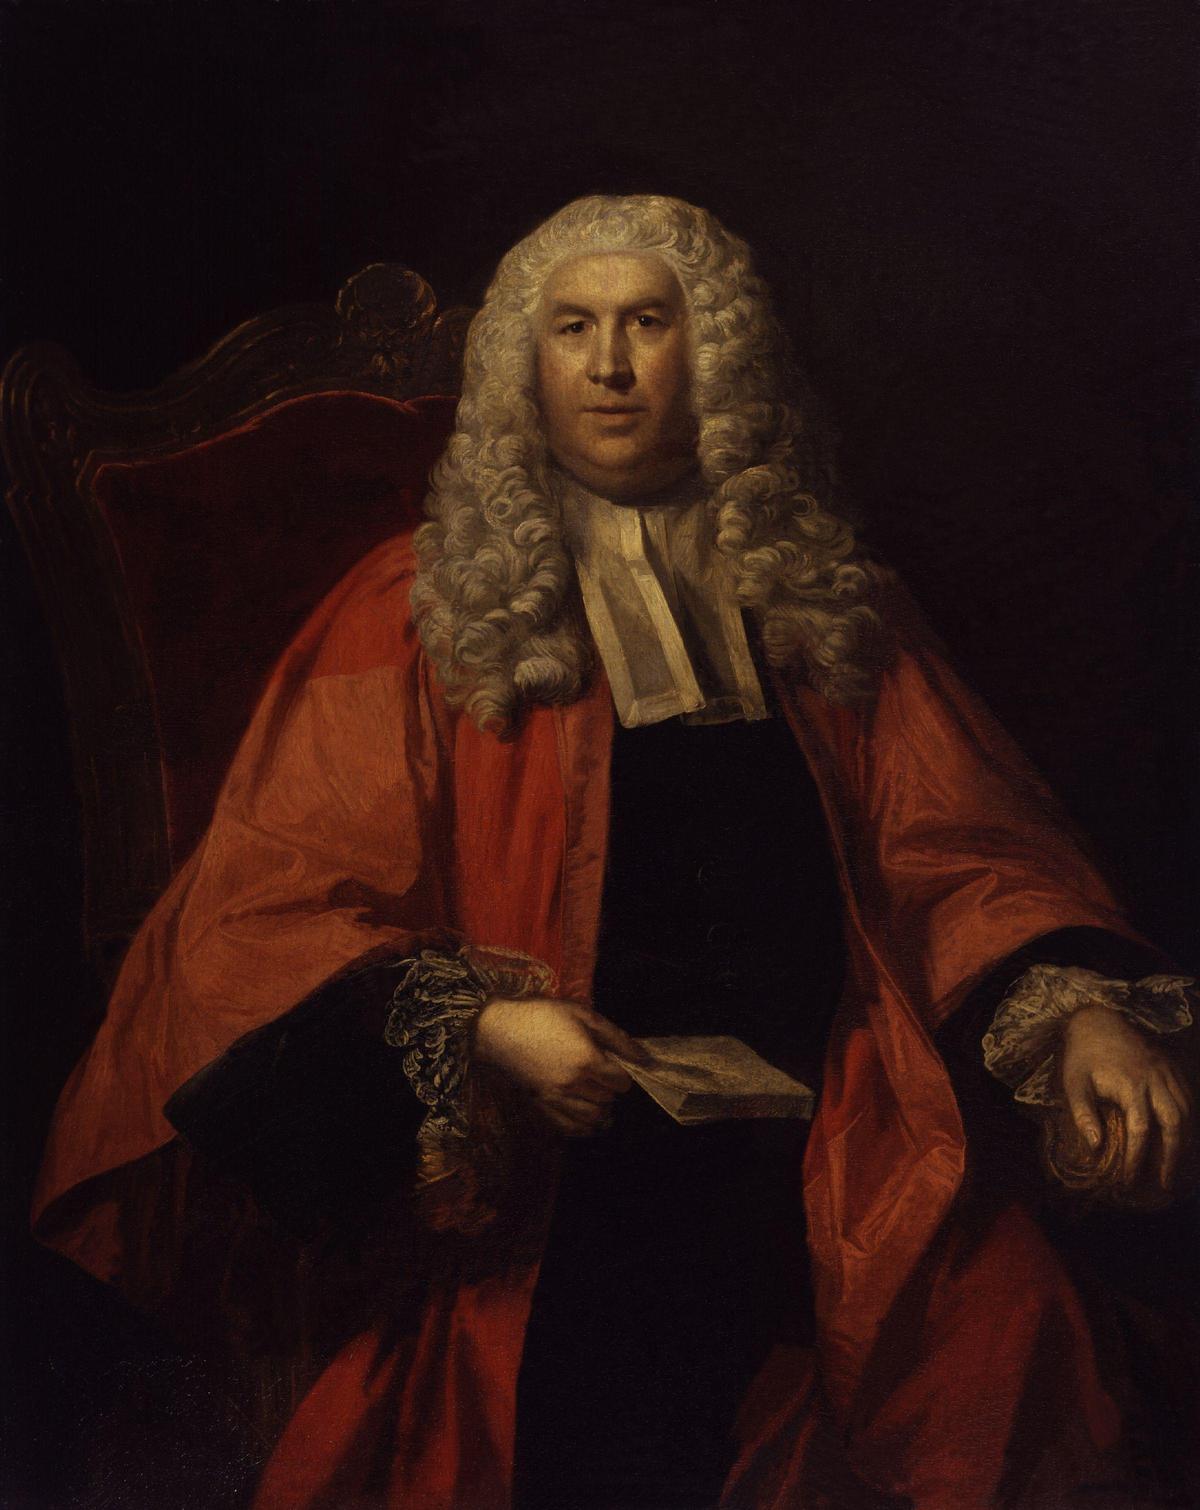 Sir William Blackstone by an unknown painter (circa 1755). (Public Domain)